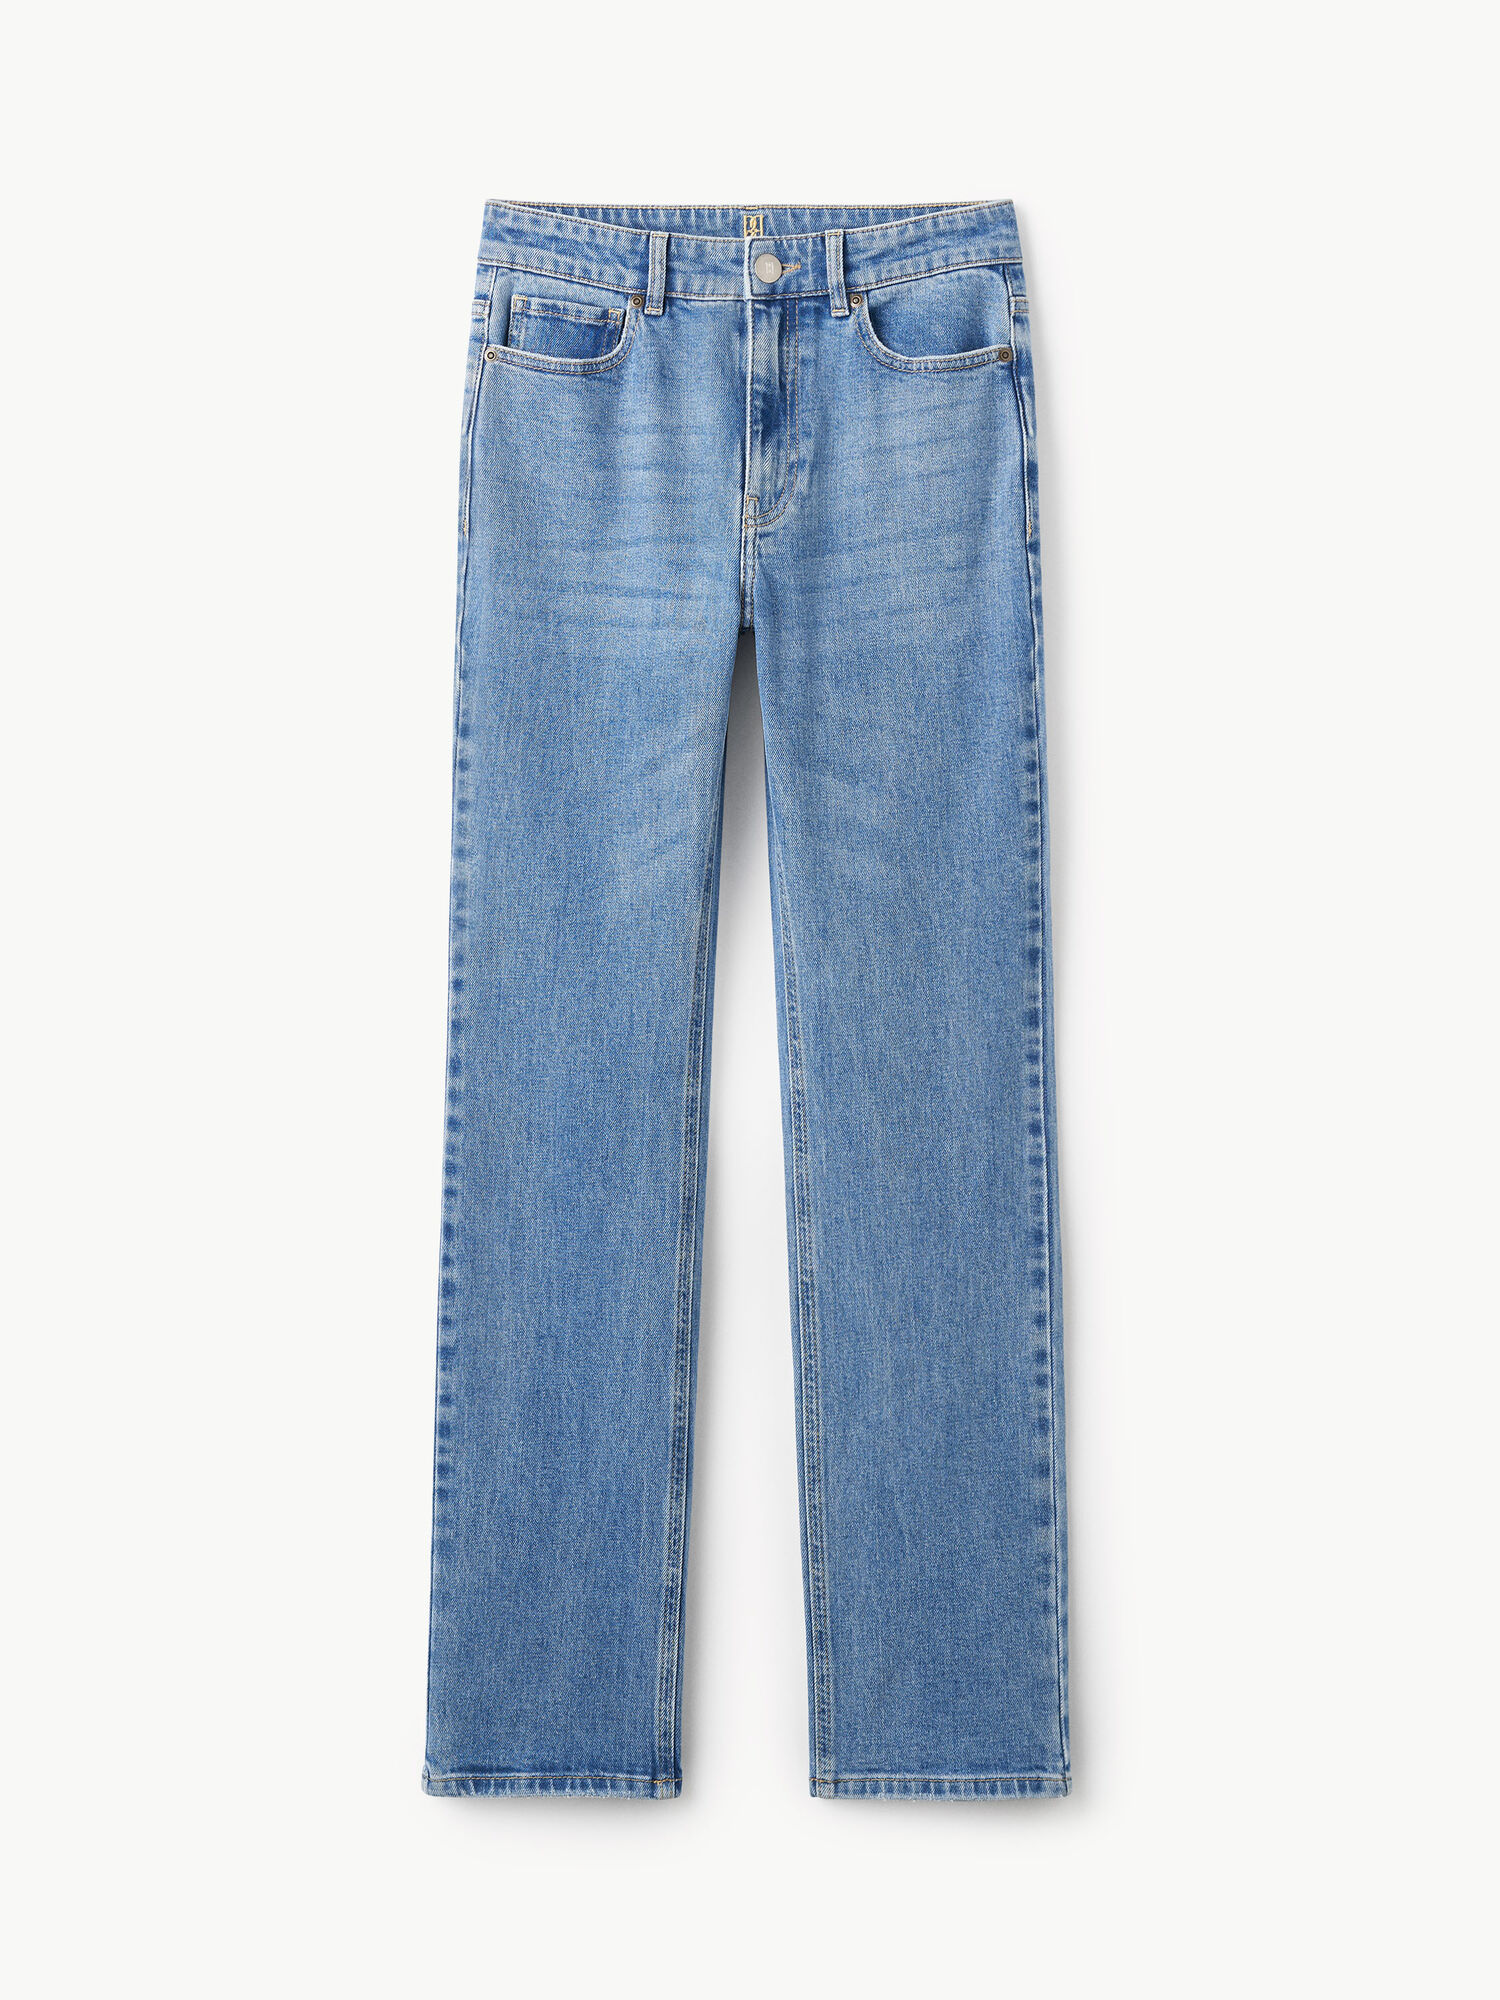 Premium Vector  Template baggy pants jeans vector illustration